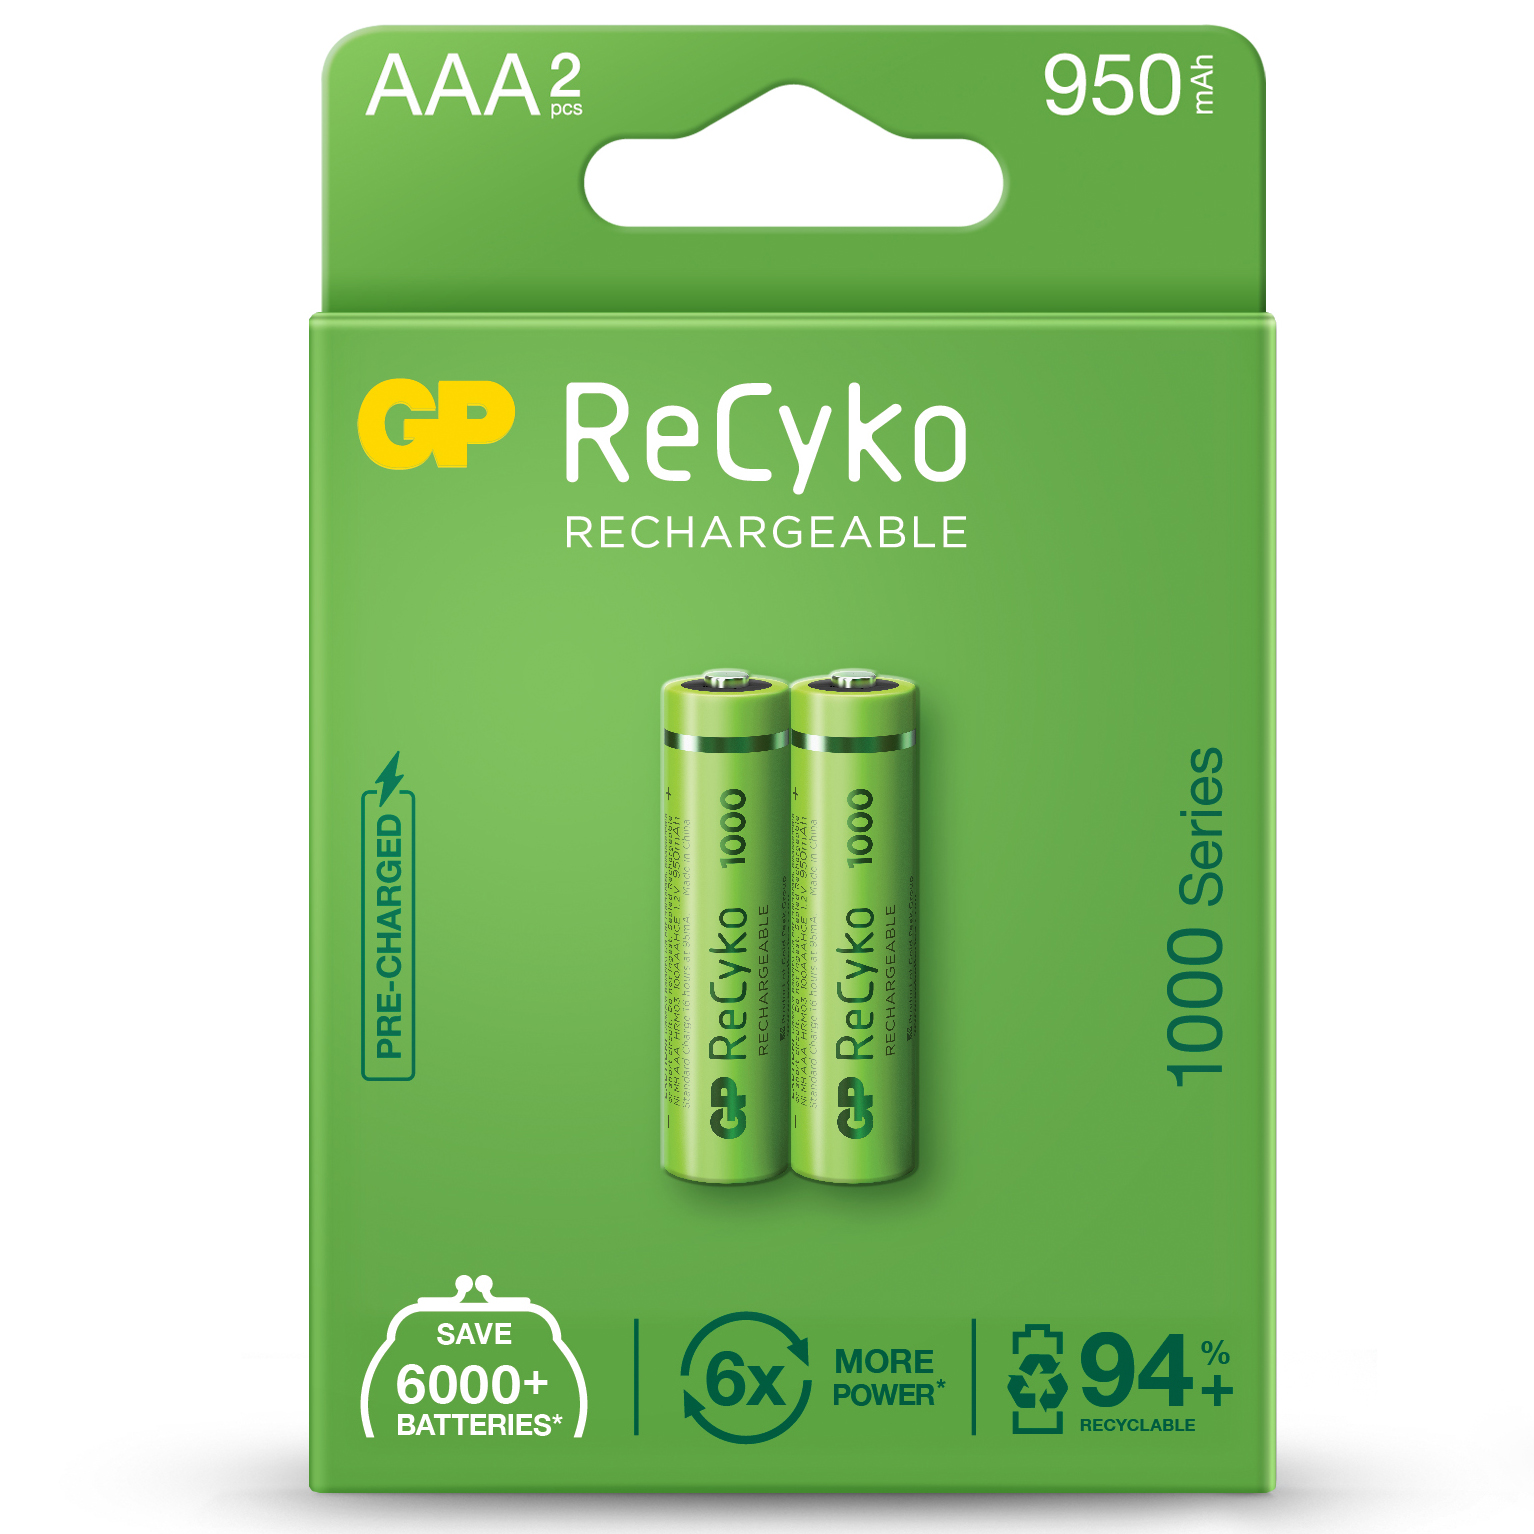 AAA, LR03 ReCyko recargable 950mAh - Blister 2und.